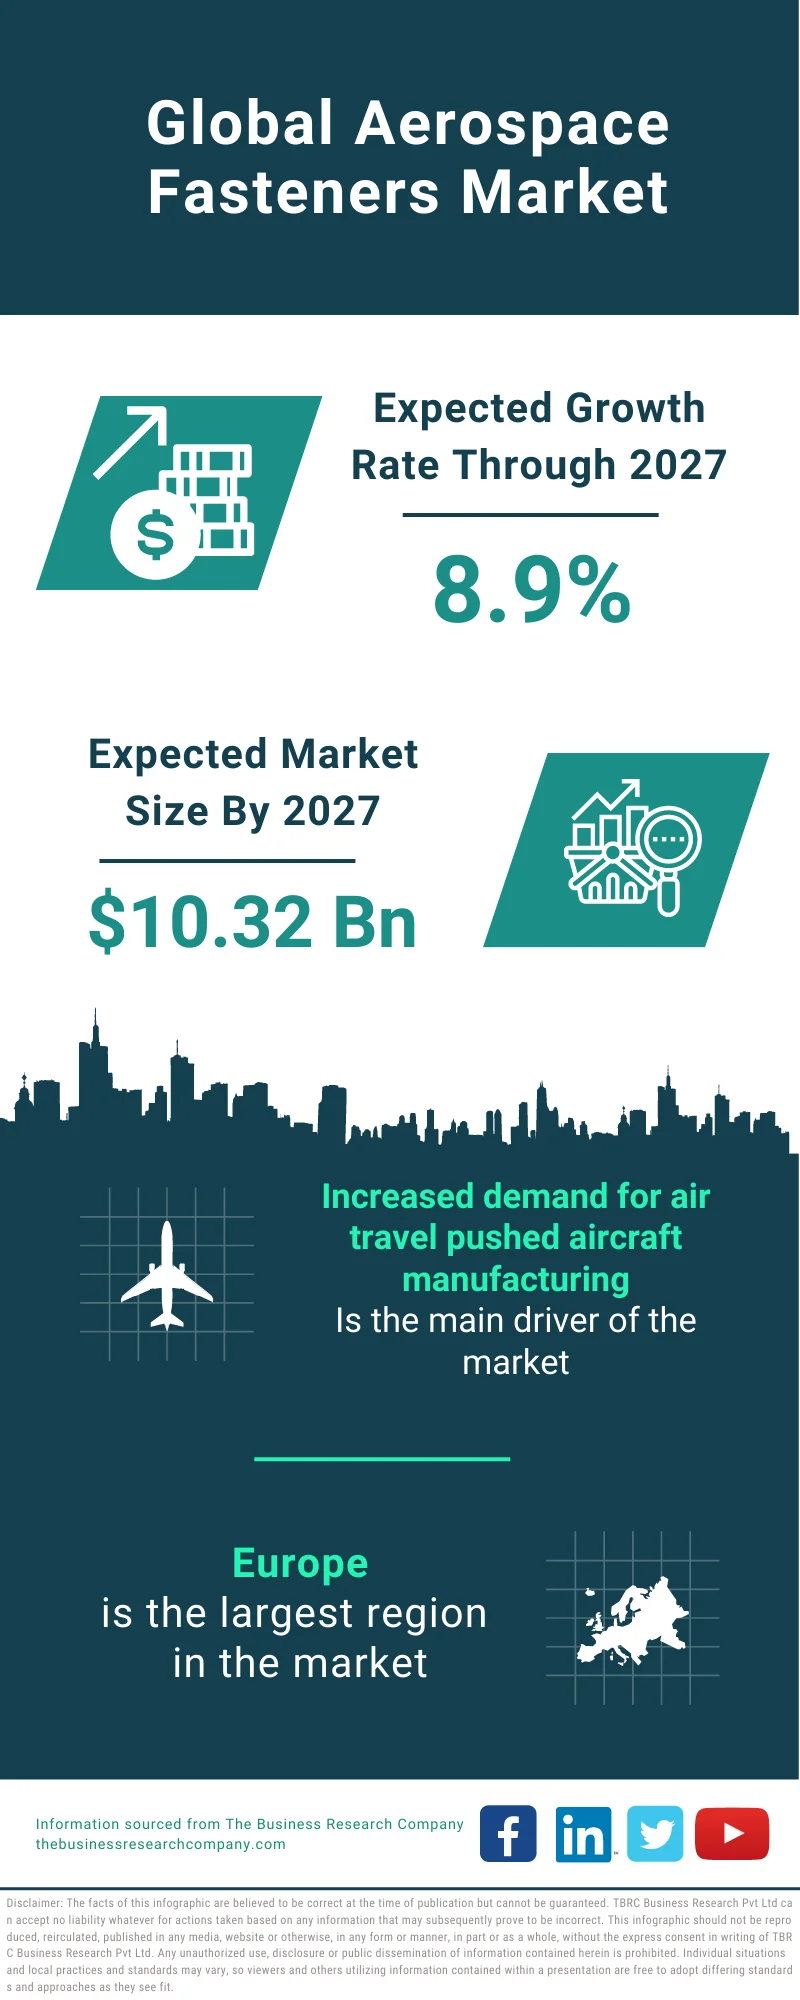 Aerospace Fasteners Market